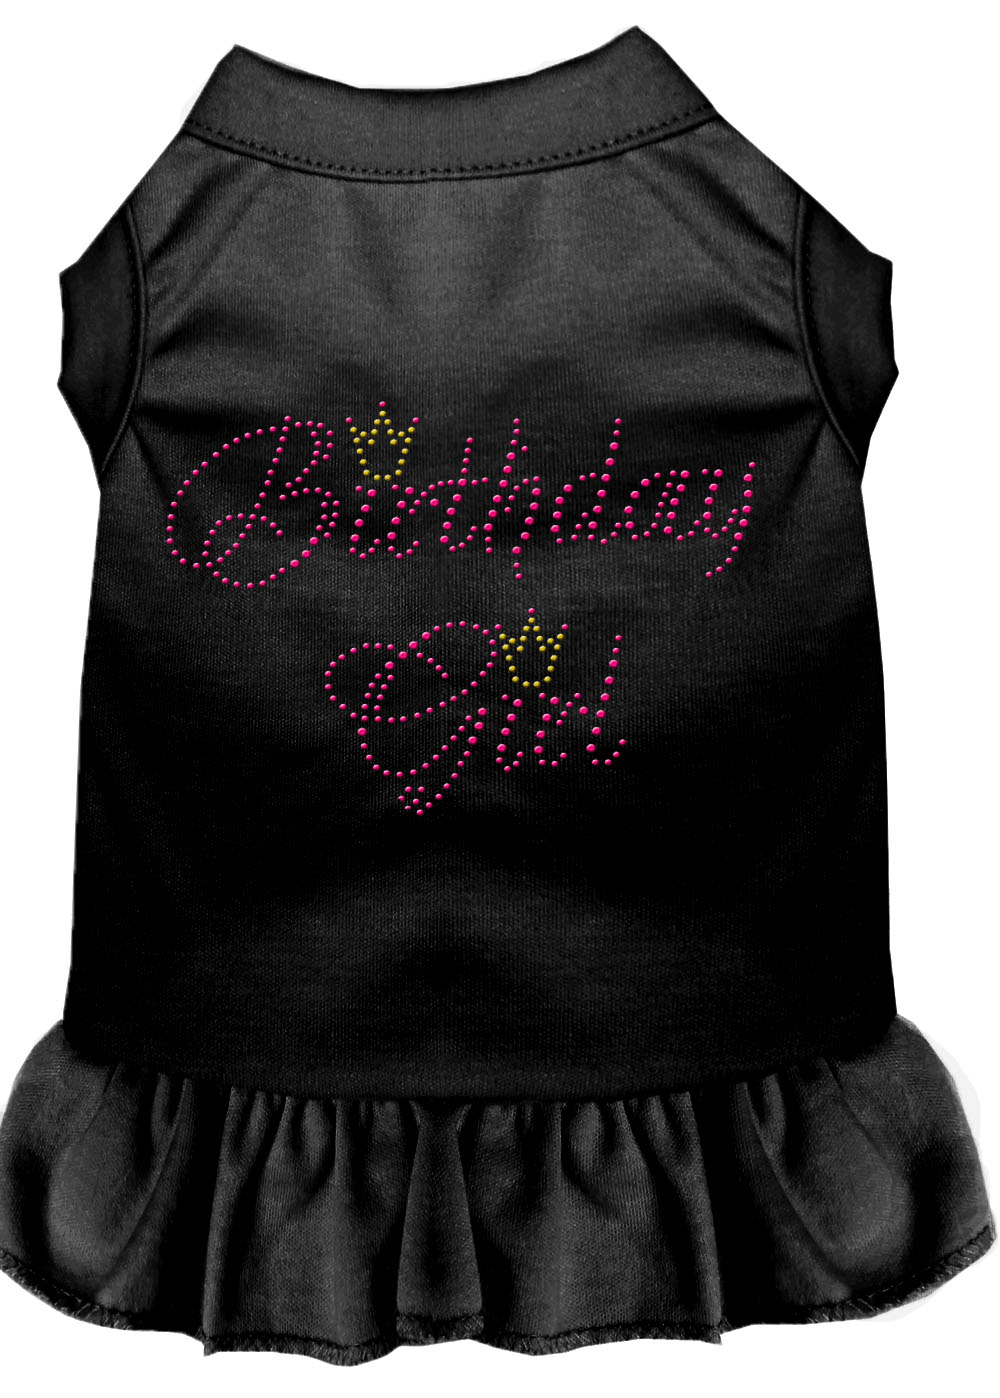 Birthday Girl Rhinestone Dress Black Lg